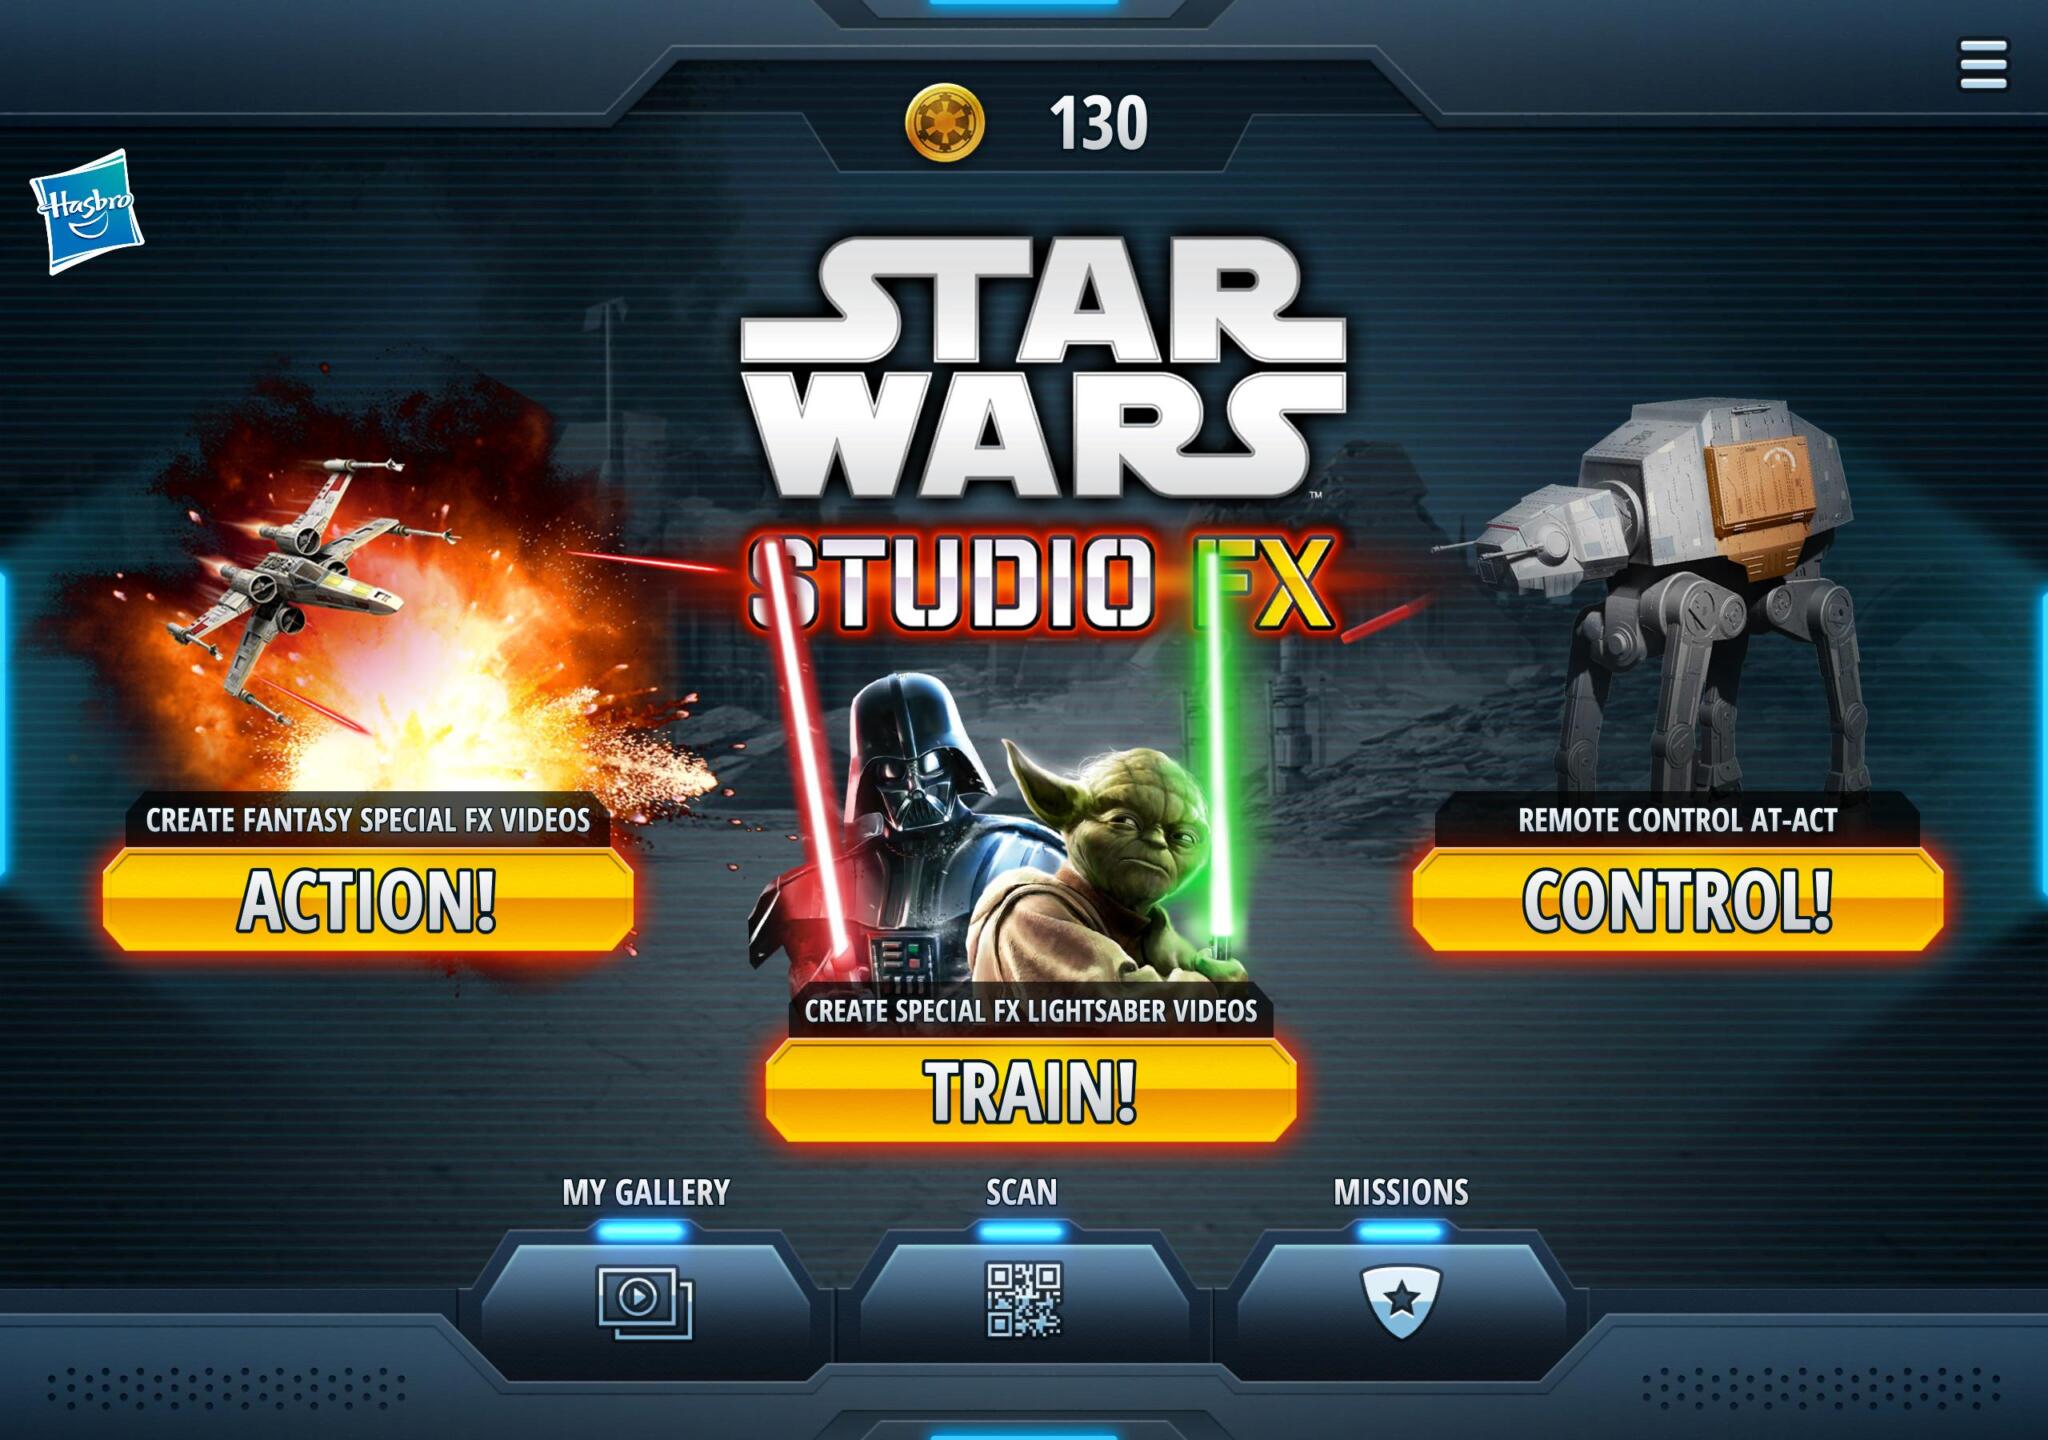 Star Wars Studio FX App